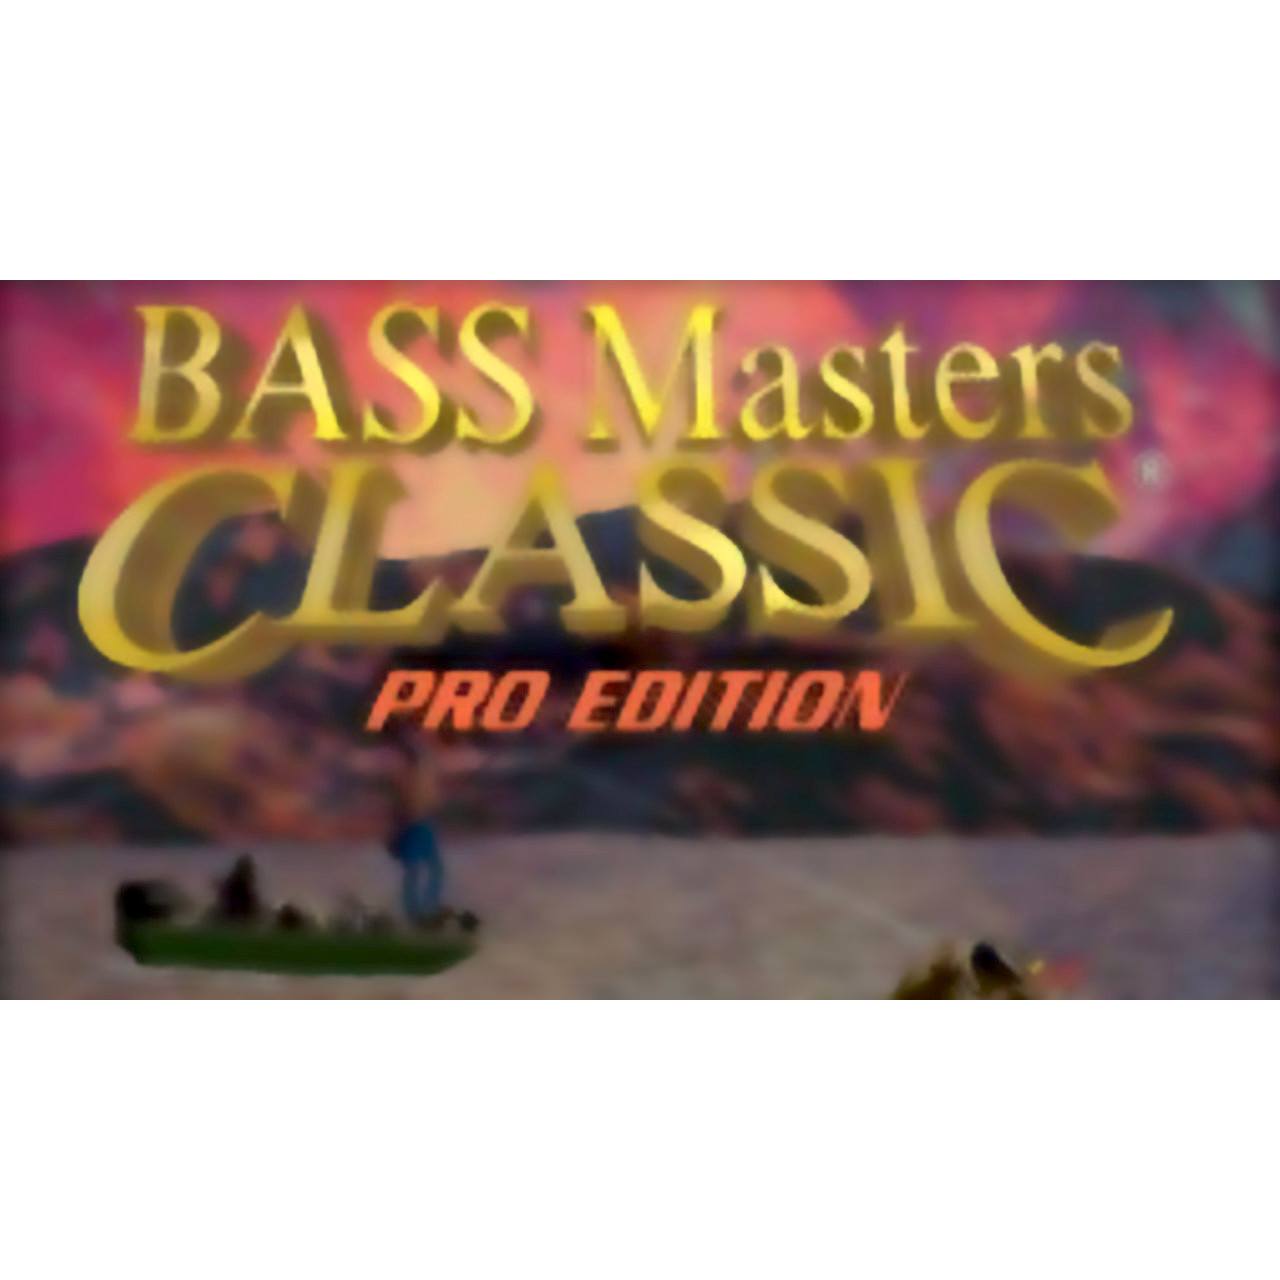 Bass Masters Classic: Pro Edition SNES Super Nintendo Game